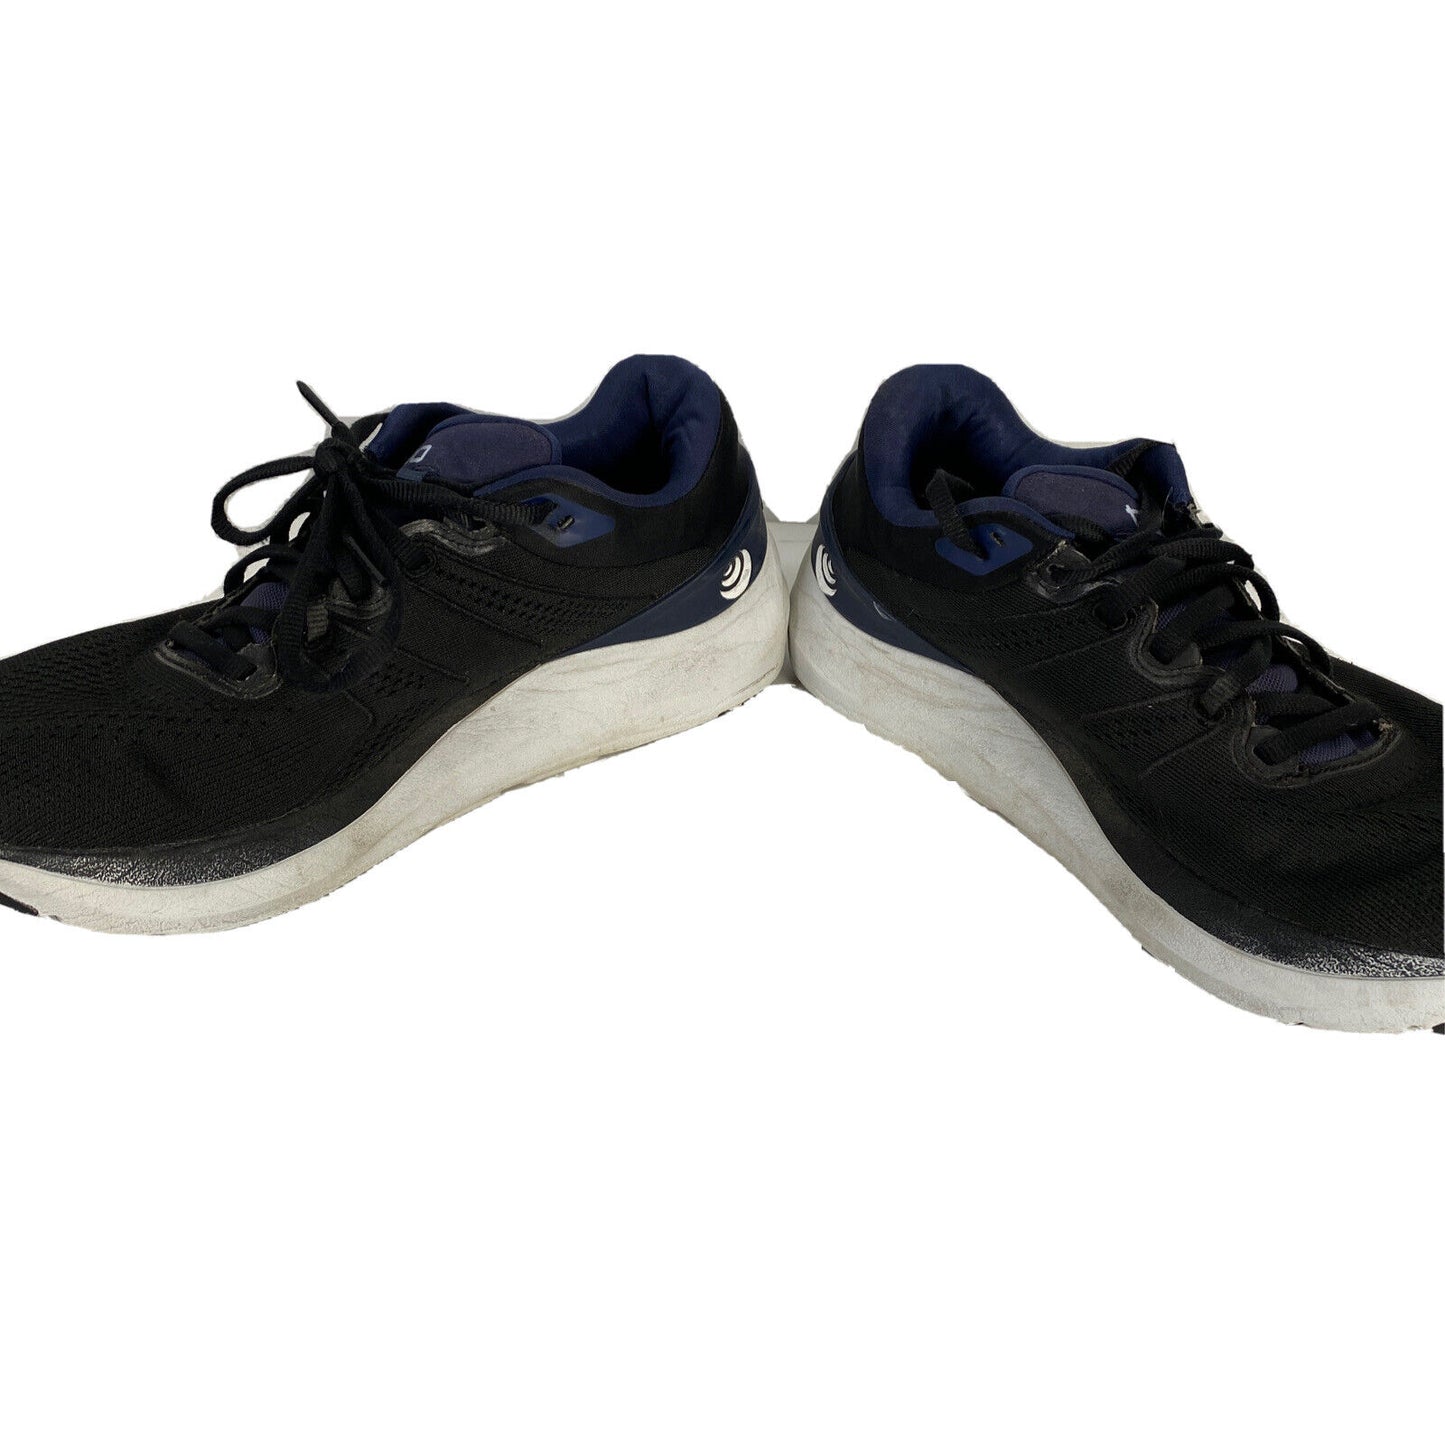 Topo Women's Black Lace Ip Phantom 2 Athletic Running Shoes Sz 7.5